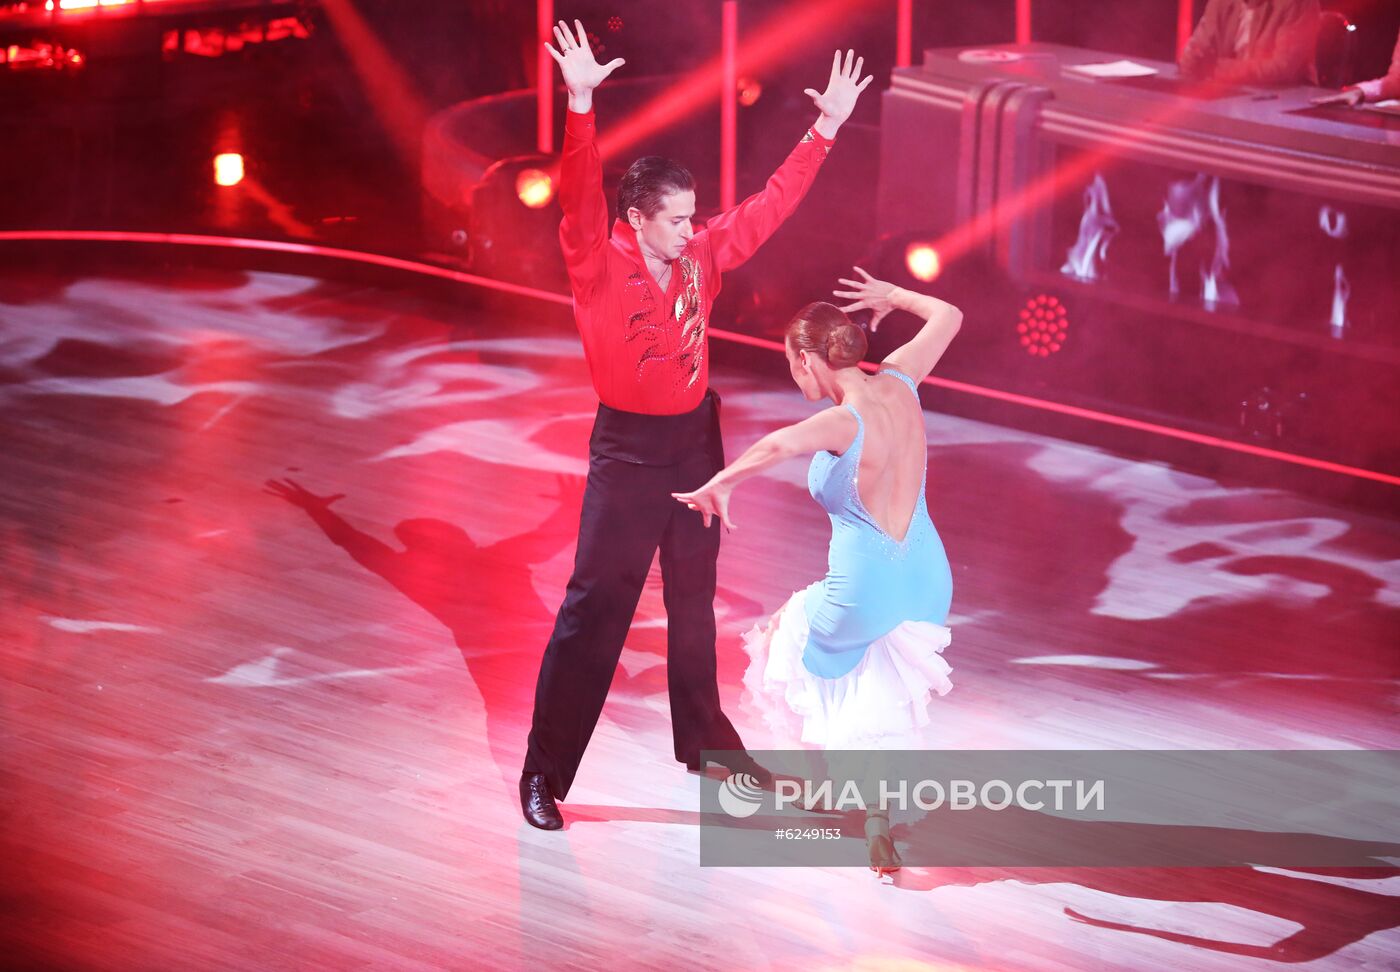 Съемки финала шоу "Танцы со звездами" на телеканале "Россия 1"